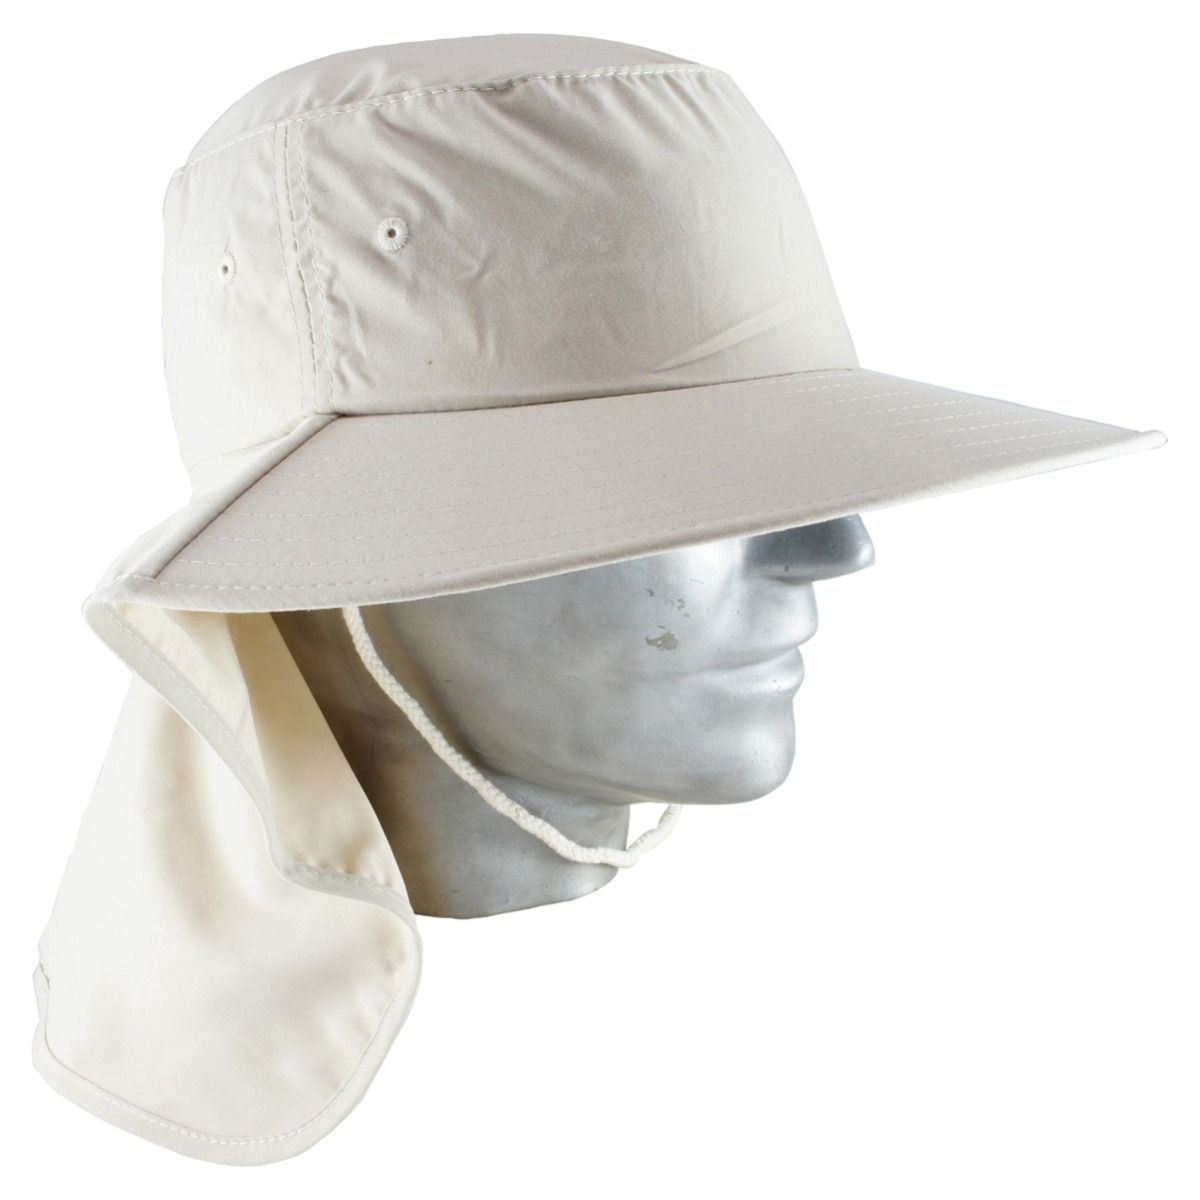 ASW H1258 Broad Brim Legionnaire Hat with Neck Flap - Khaki